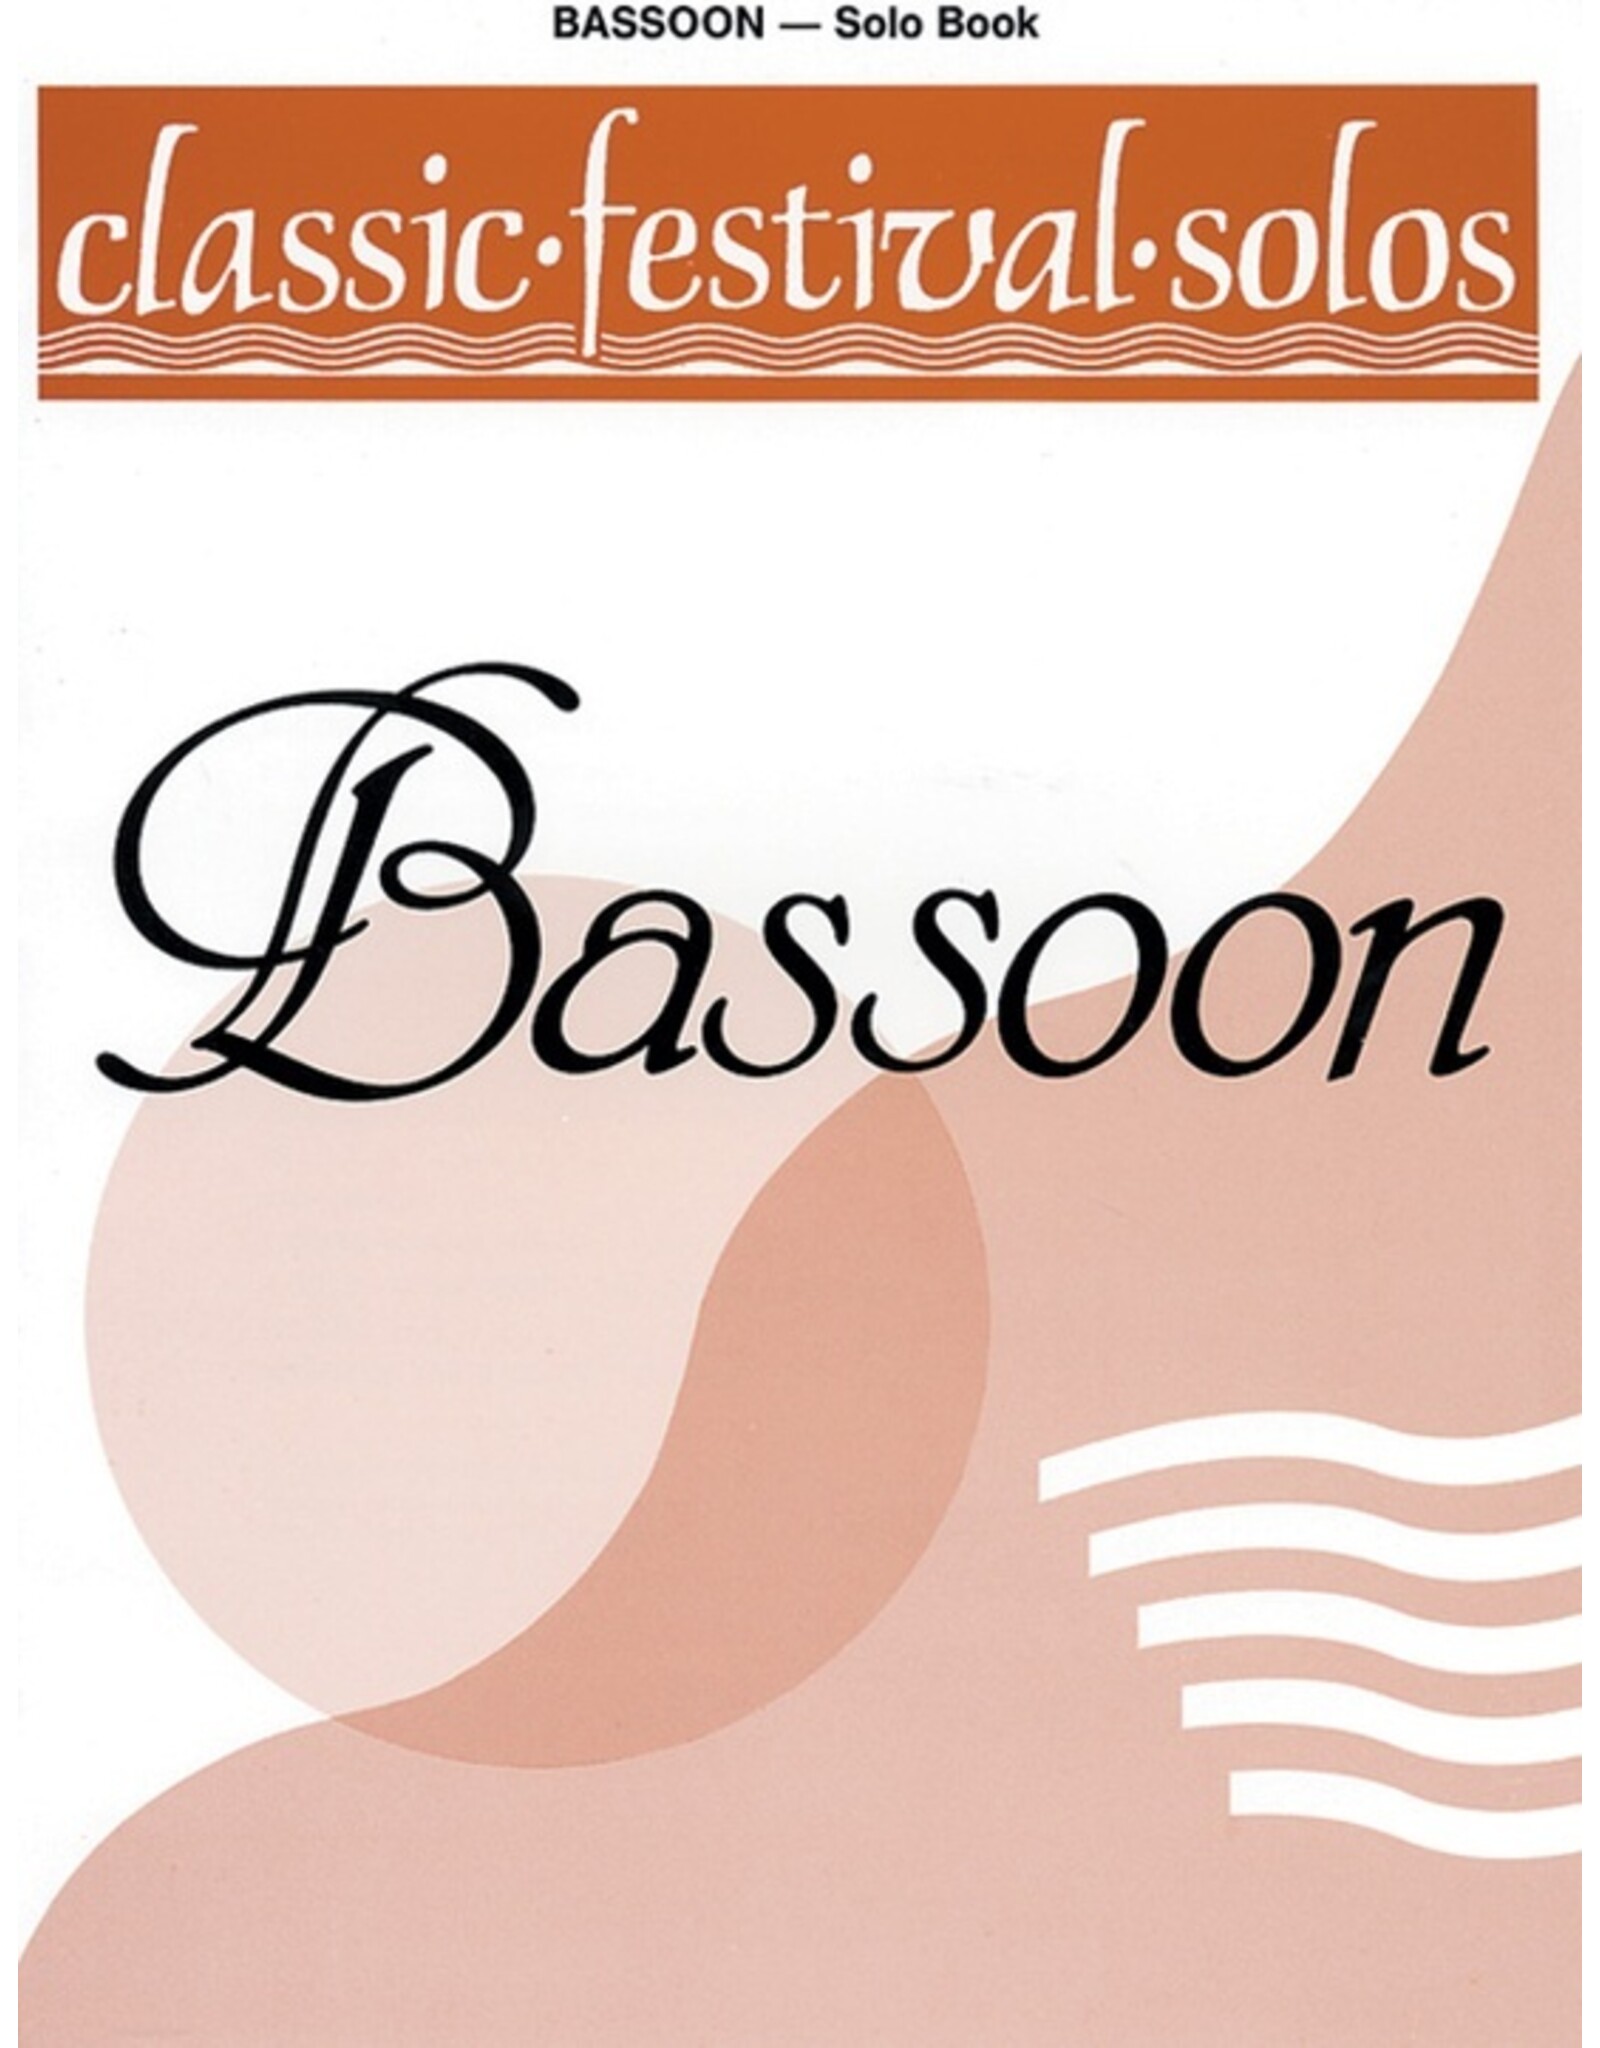 Alfred Classic Festival Solos (Bassoon), Volume 1 Solo Book